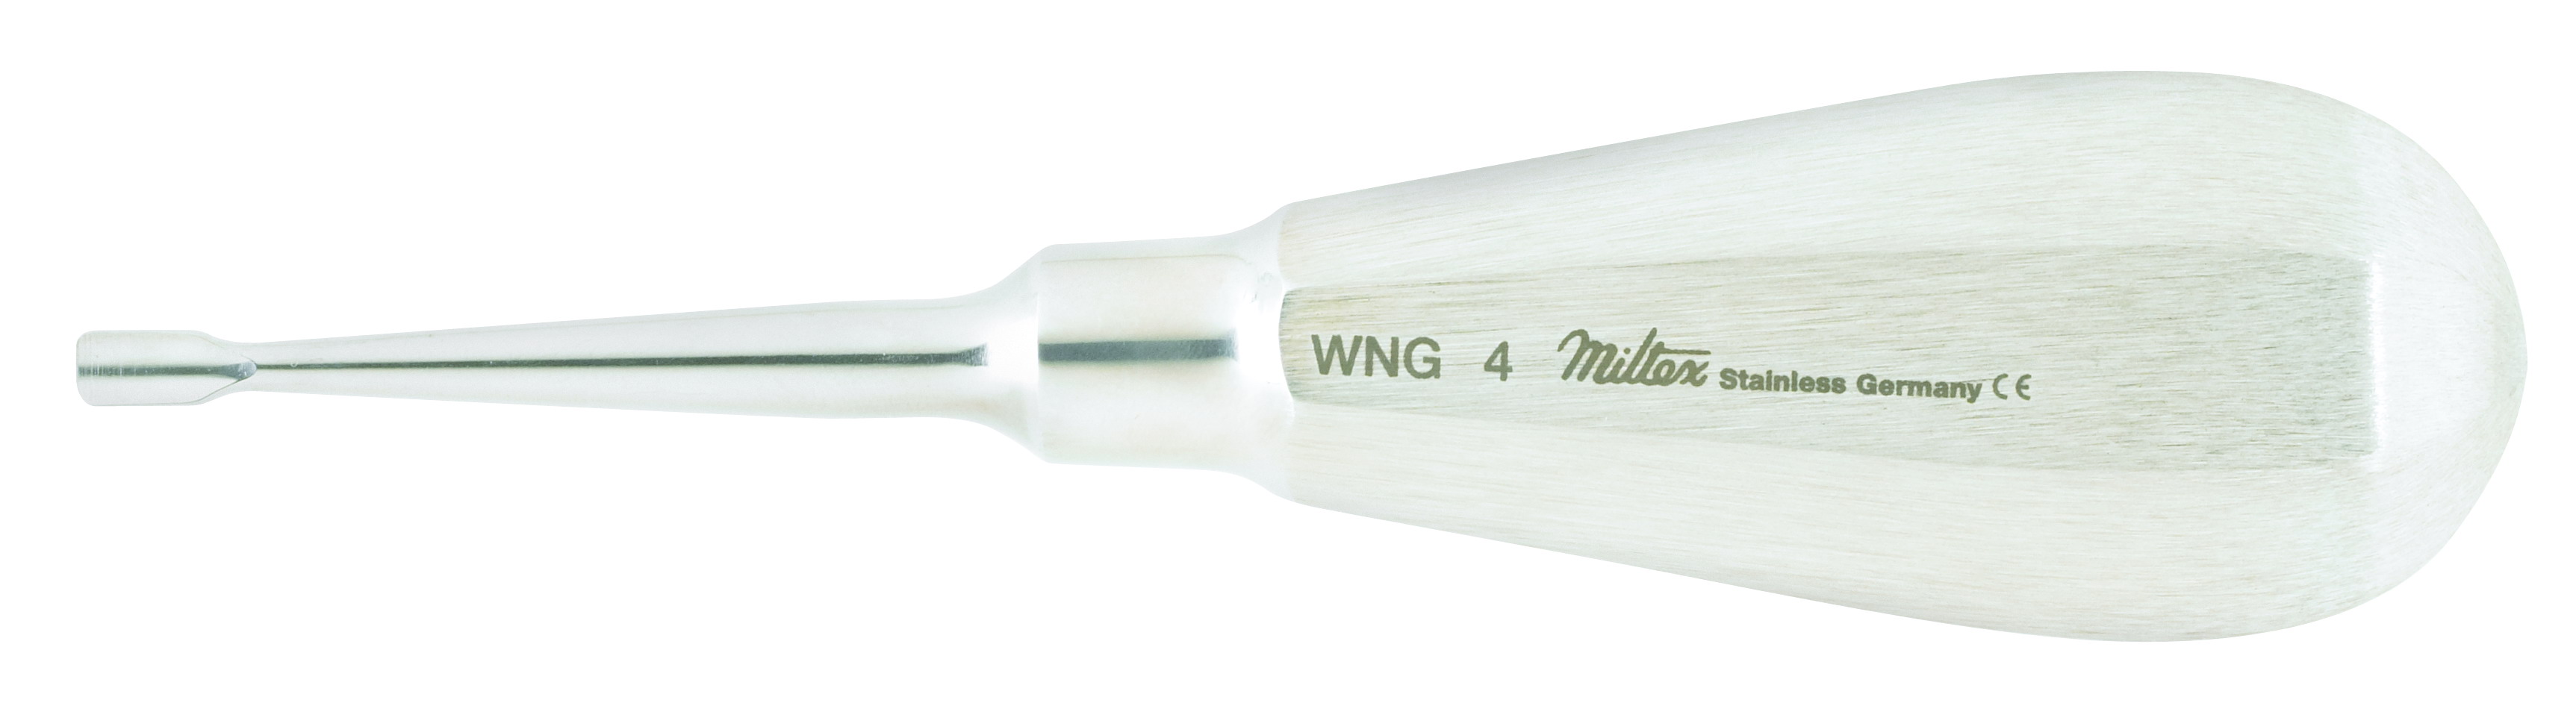 miltex-winged-dental-elevator-size-4mm-delwng4-miltex.jpg